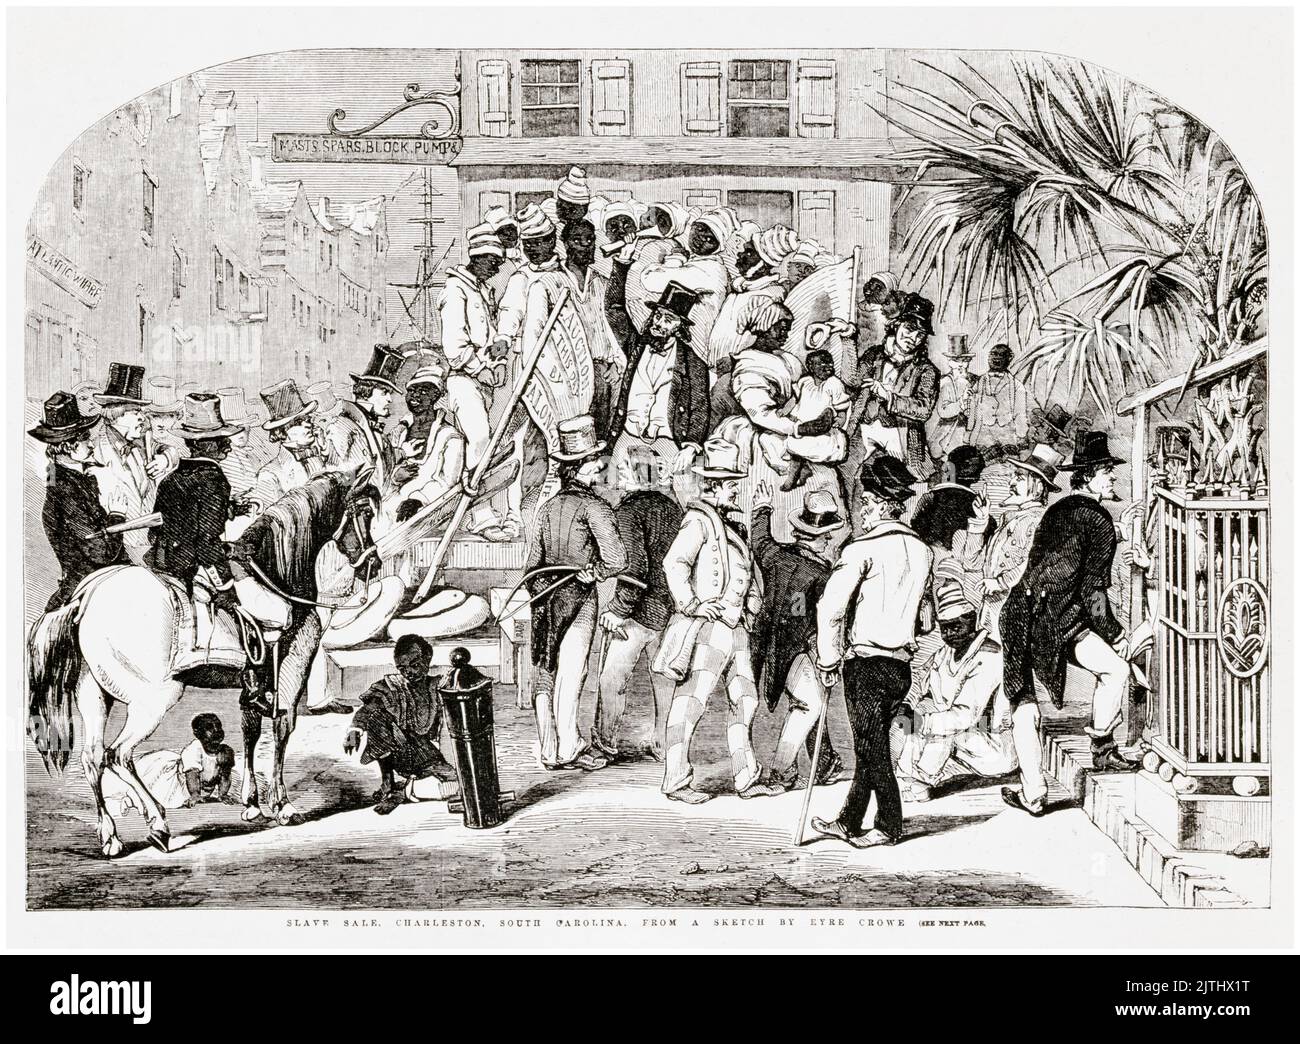 Slave sale, Charleston, South Carolina, engraving by Eyre Crowe, 1856 Stock Photo